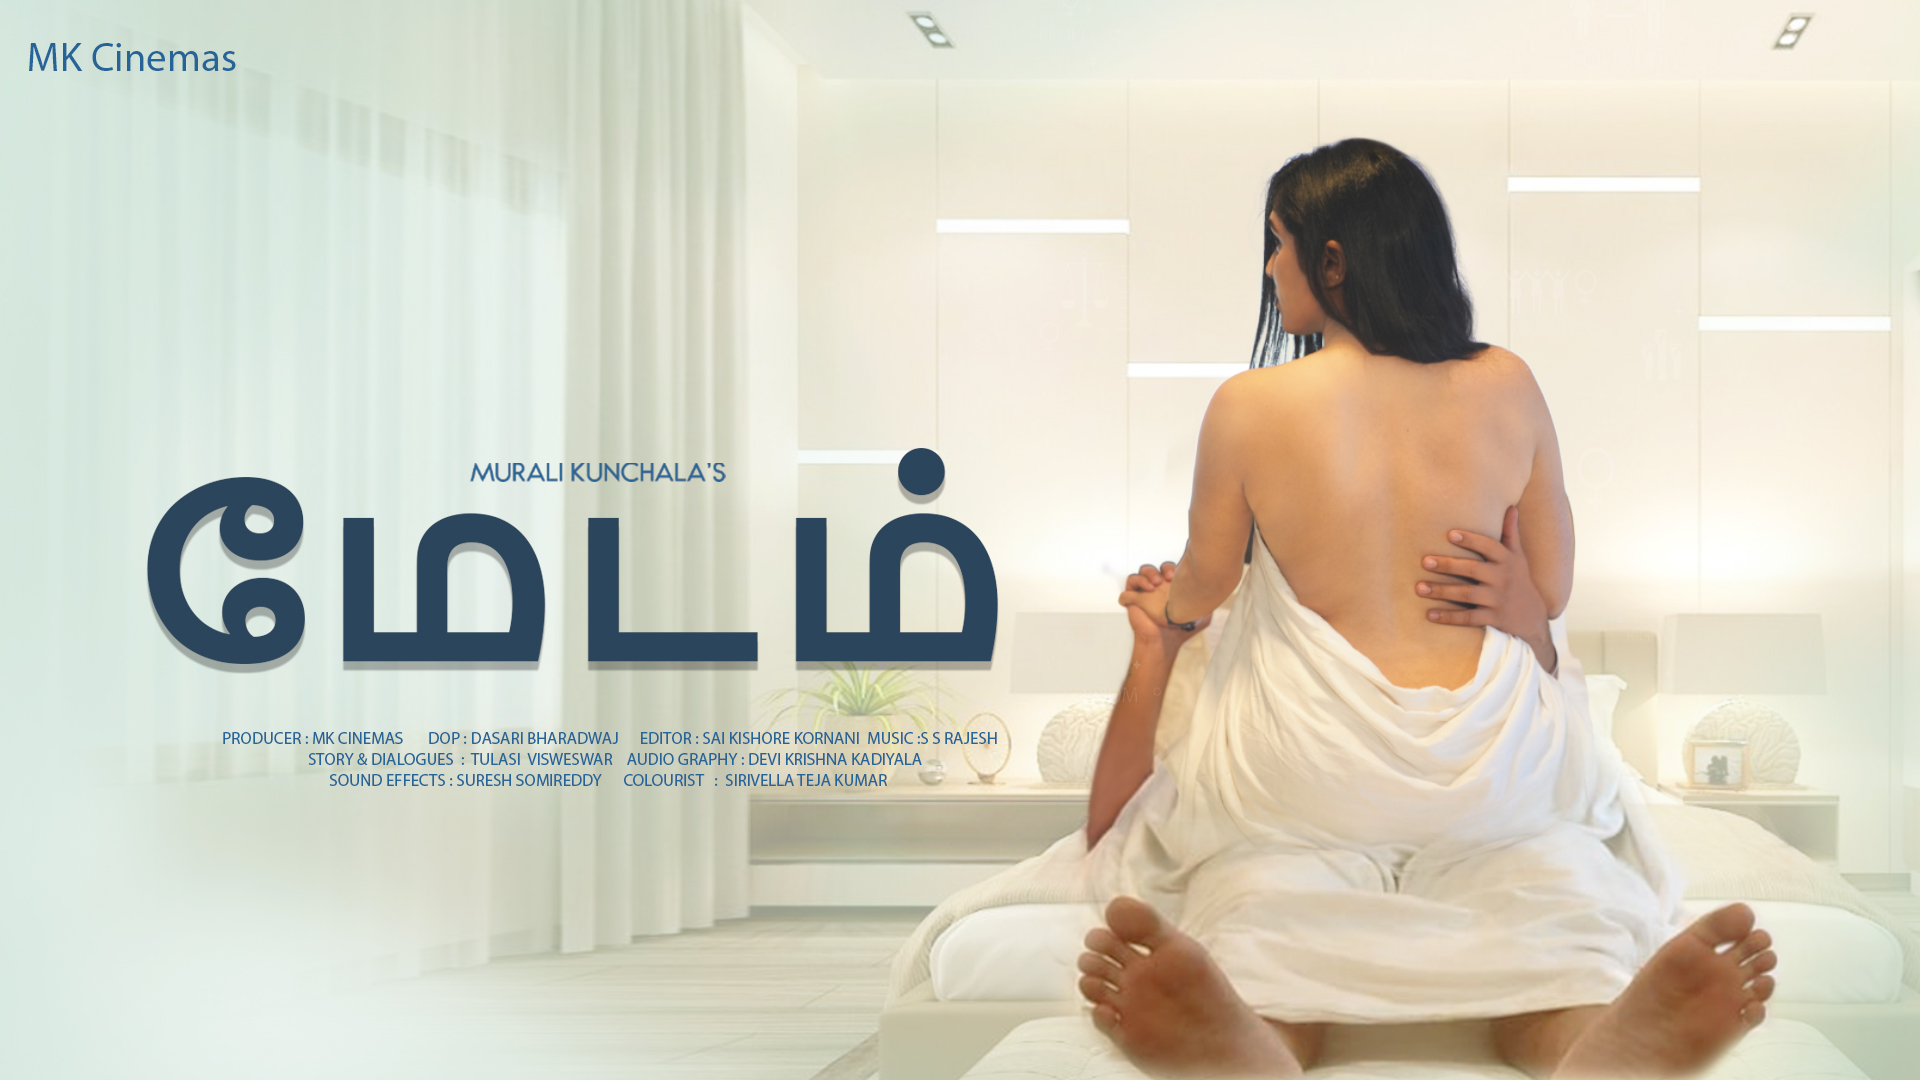 Tamil new movie download keylogger download windows 10